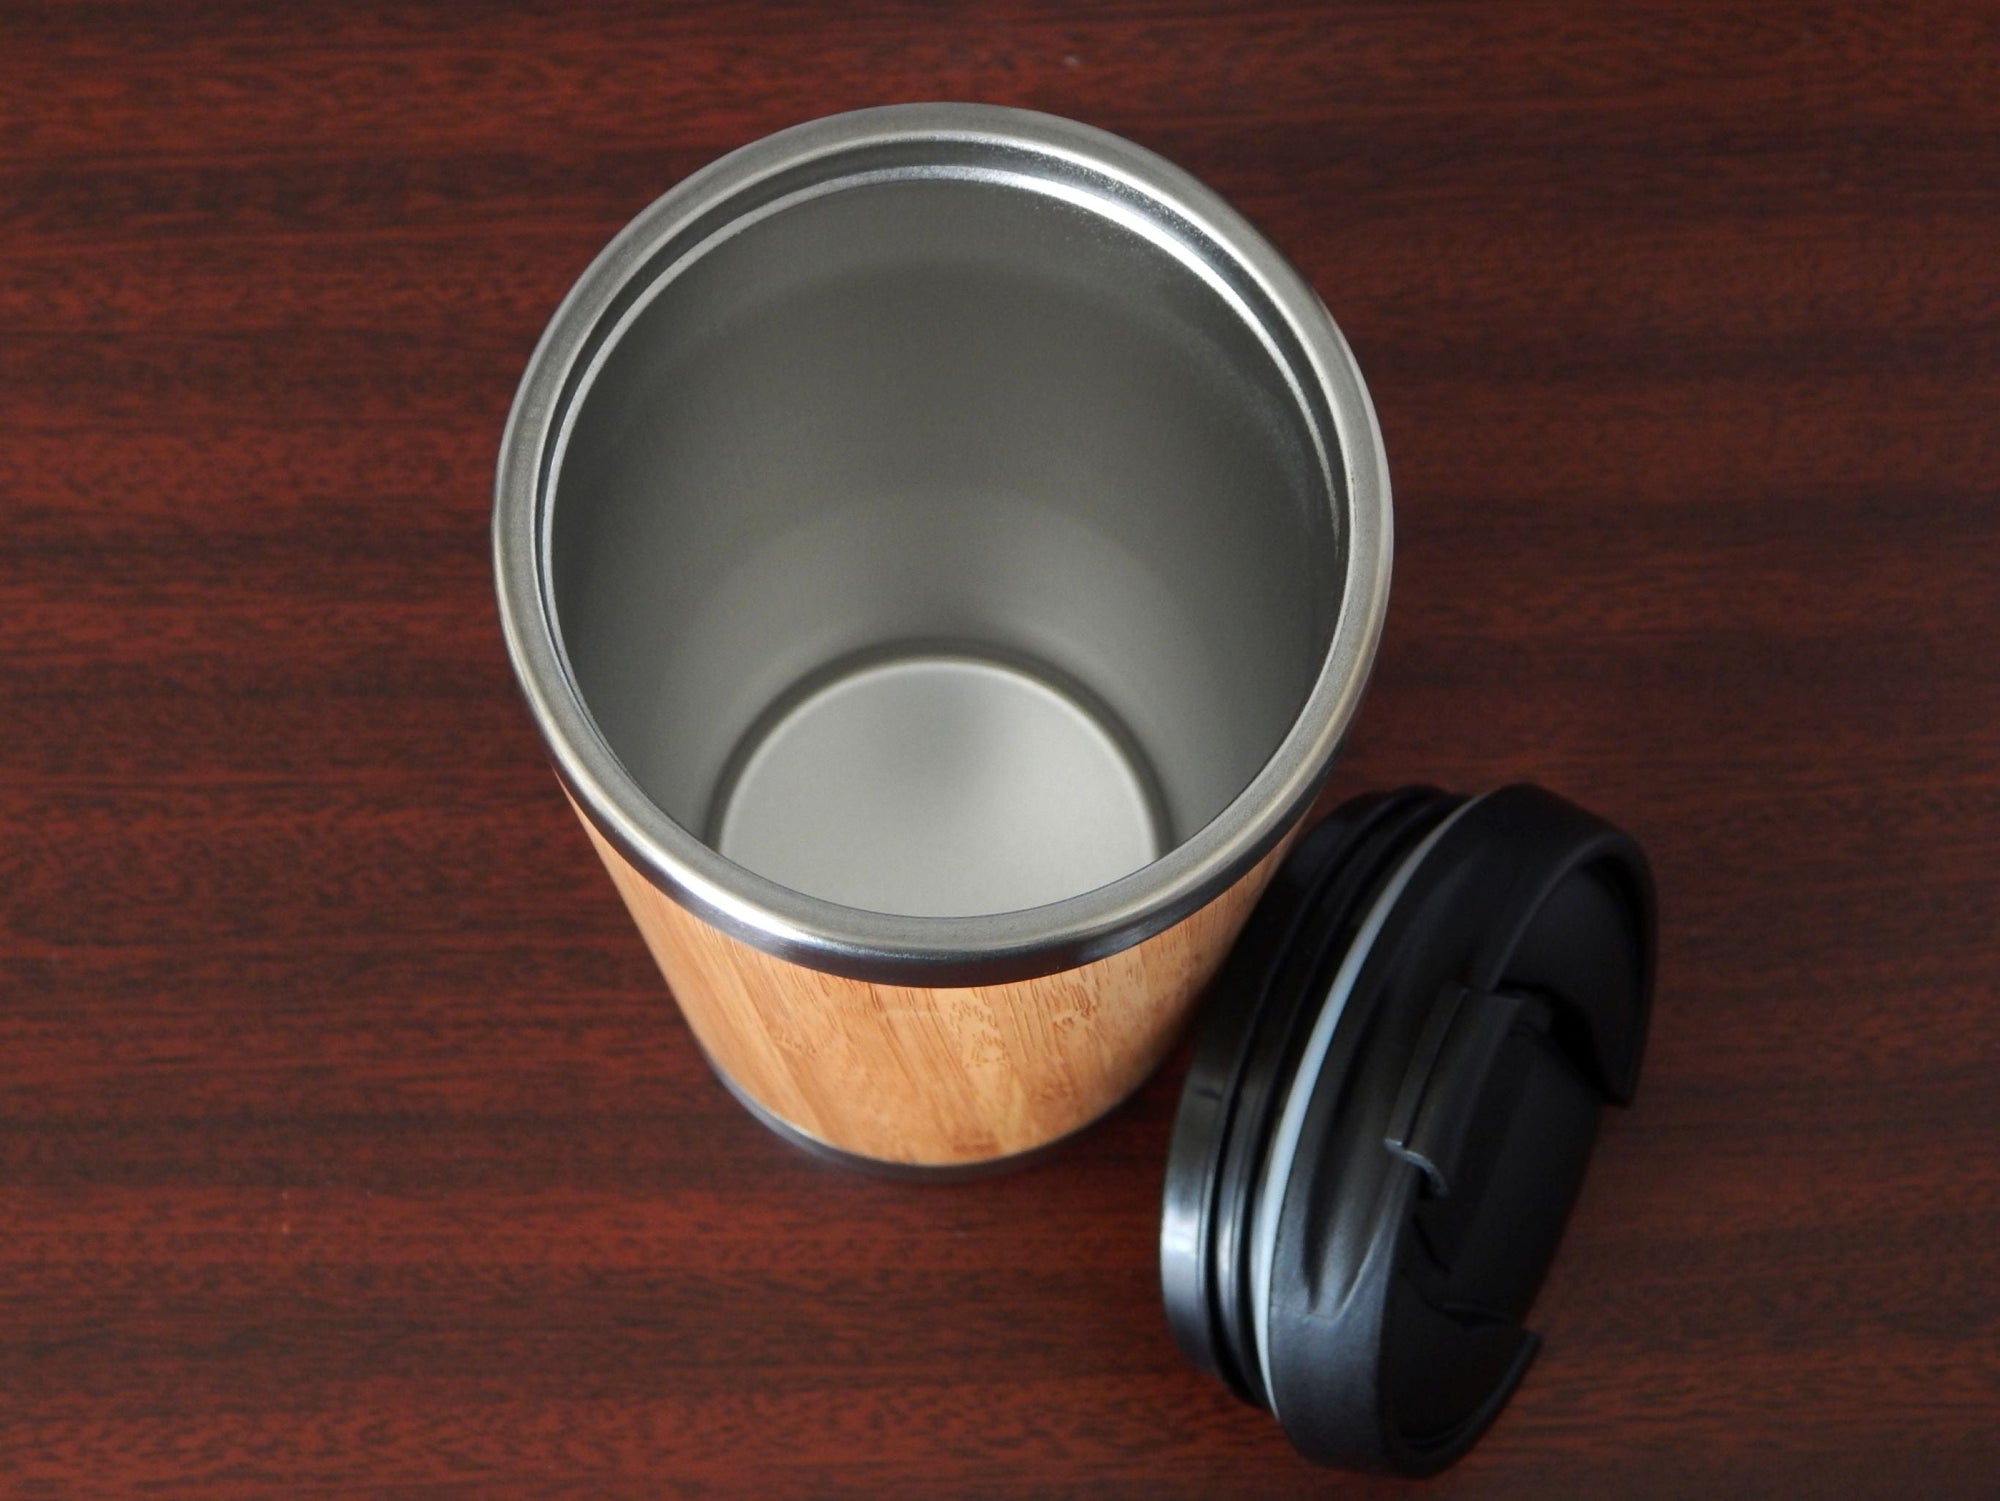 Grandpa Gift | Pregnancy Reveal Tumbler | New Grandparent Mug  | Coffee Cup